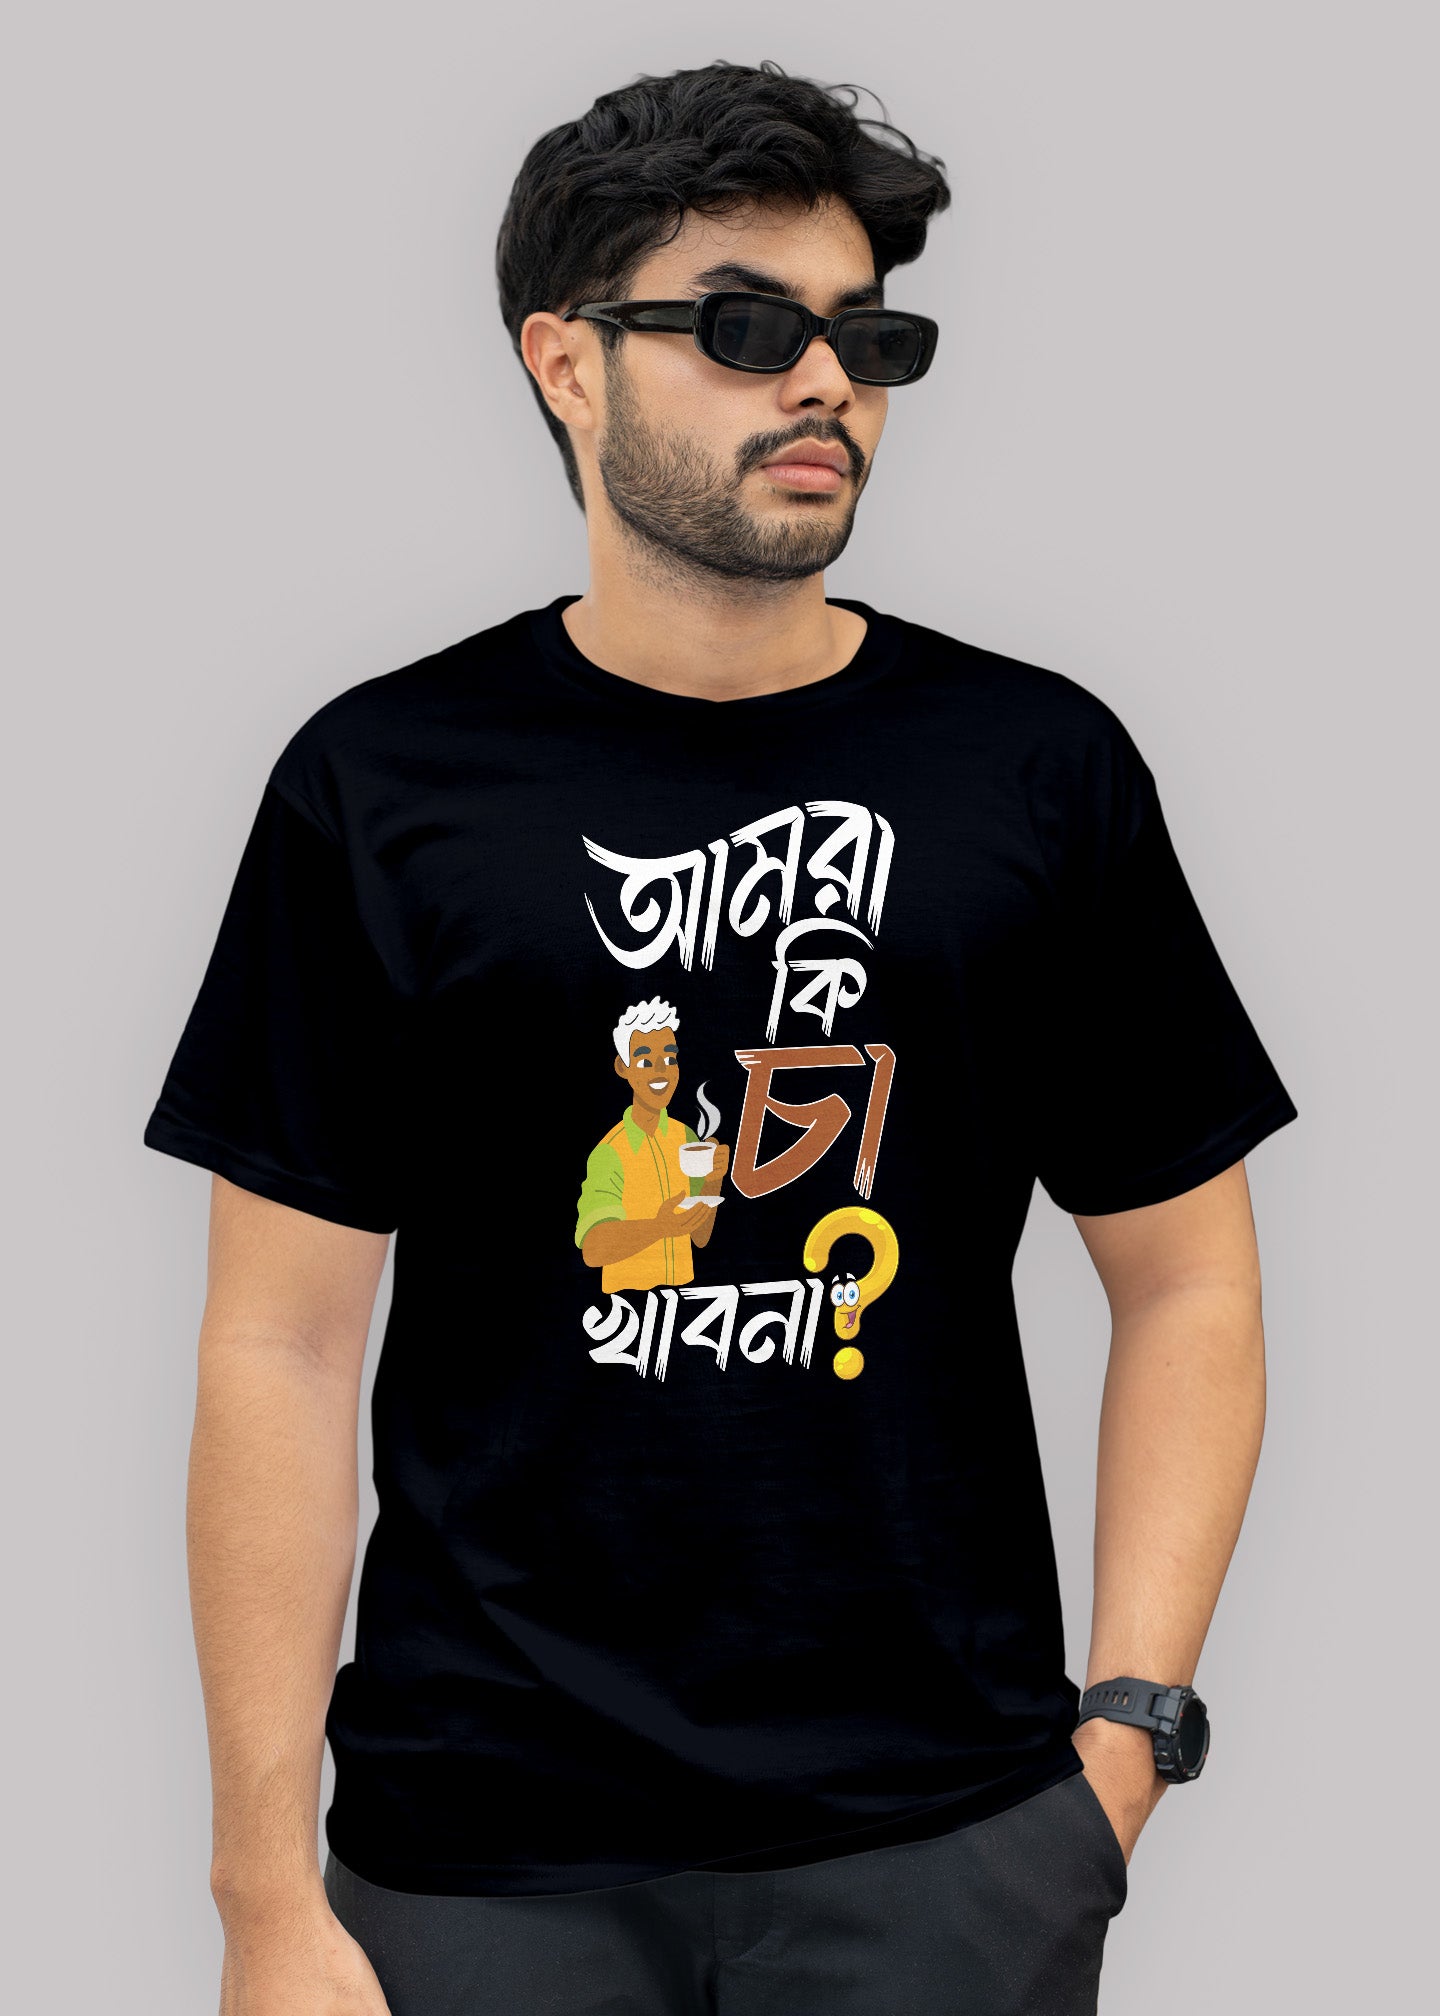 Amra ki cha khabona bengali Printed Half Sleeve Premium Cotton T-shirt For Men